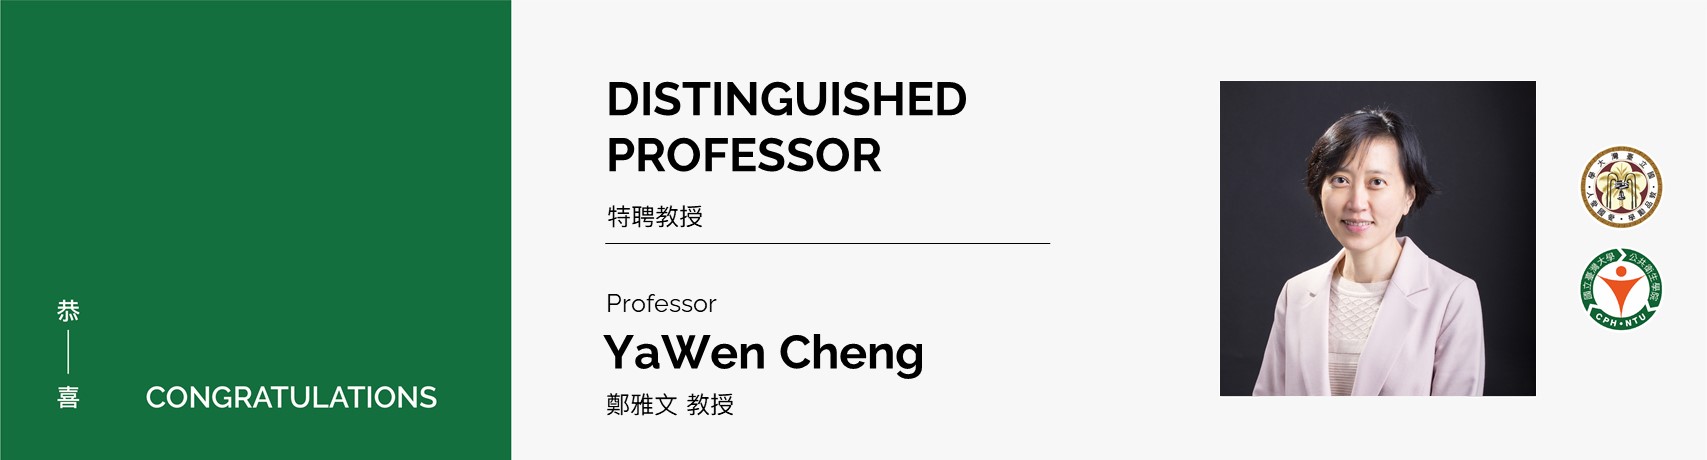 【Congratulations!】Professor YaWen Cheng as the Distinguished Professor